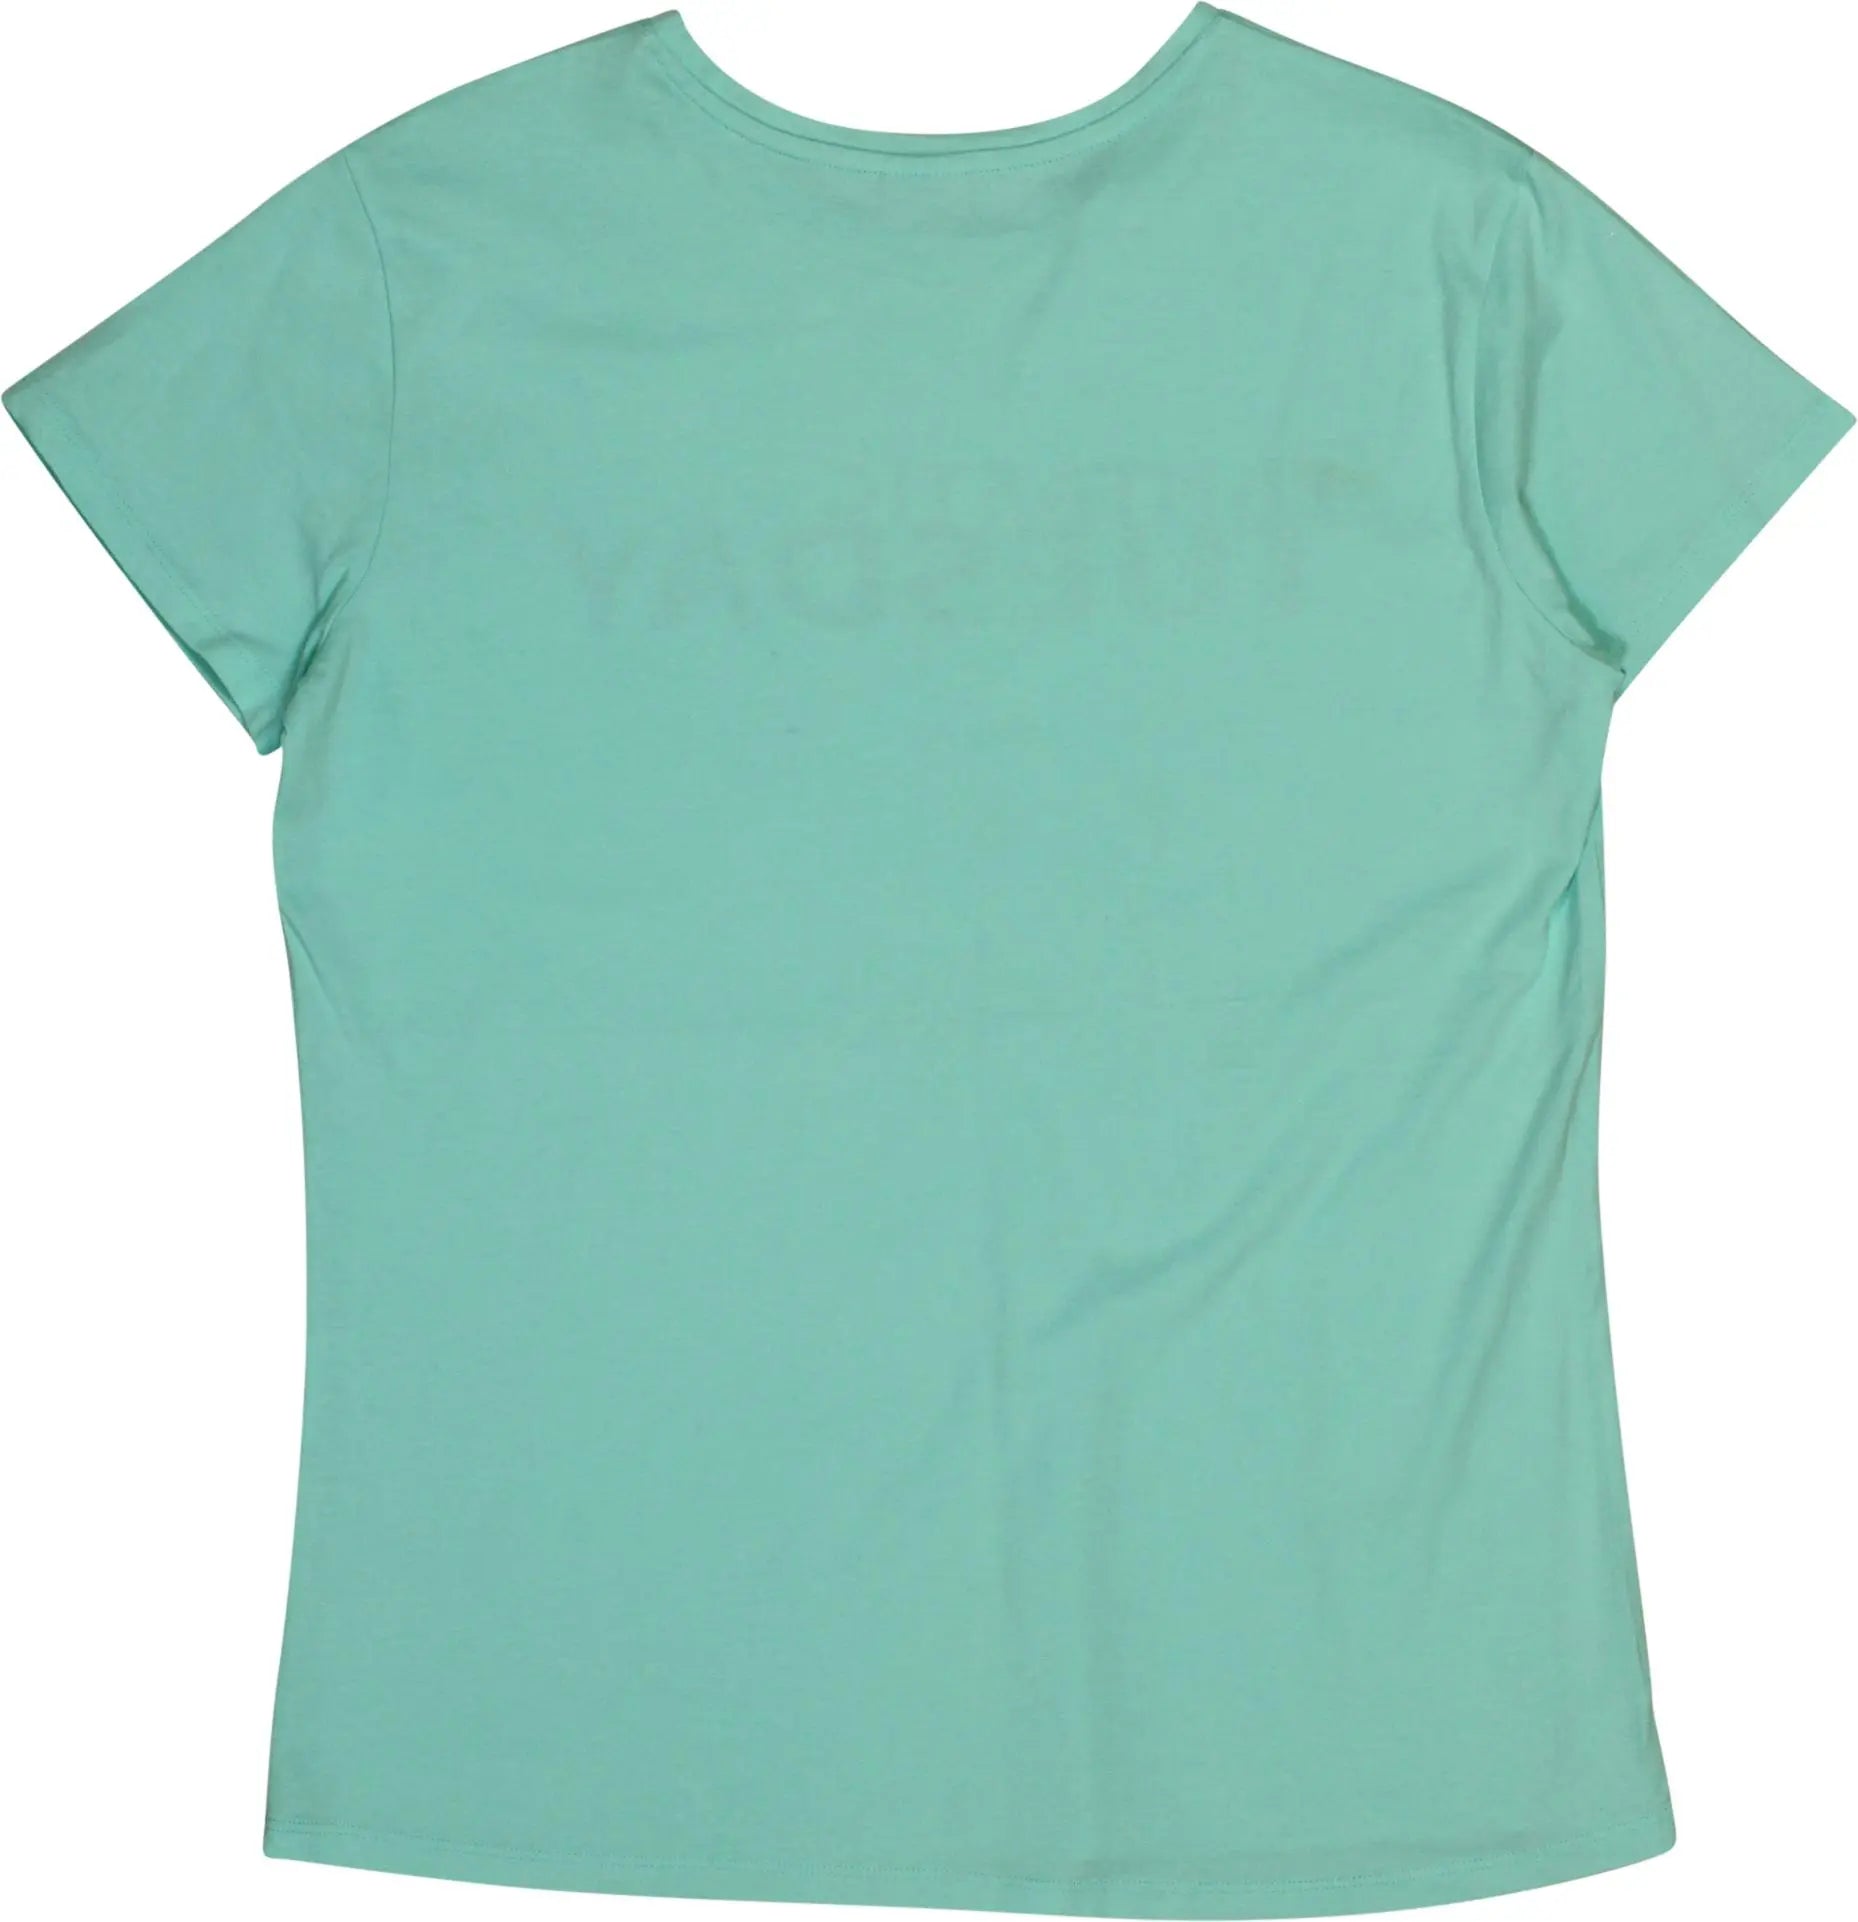 Jacqueline de Yong - T-shirt- ThriftTale.com - Vintage and second handclothing